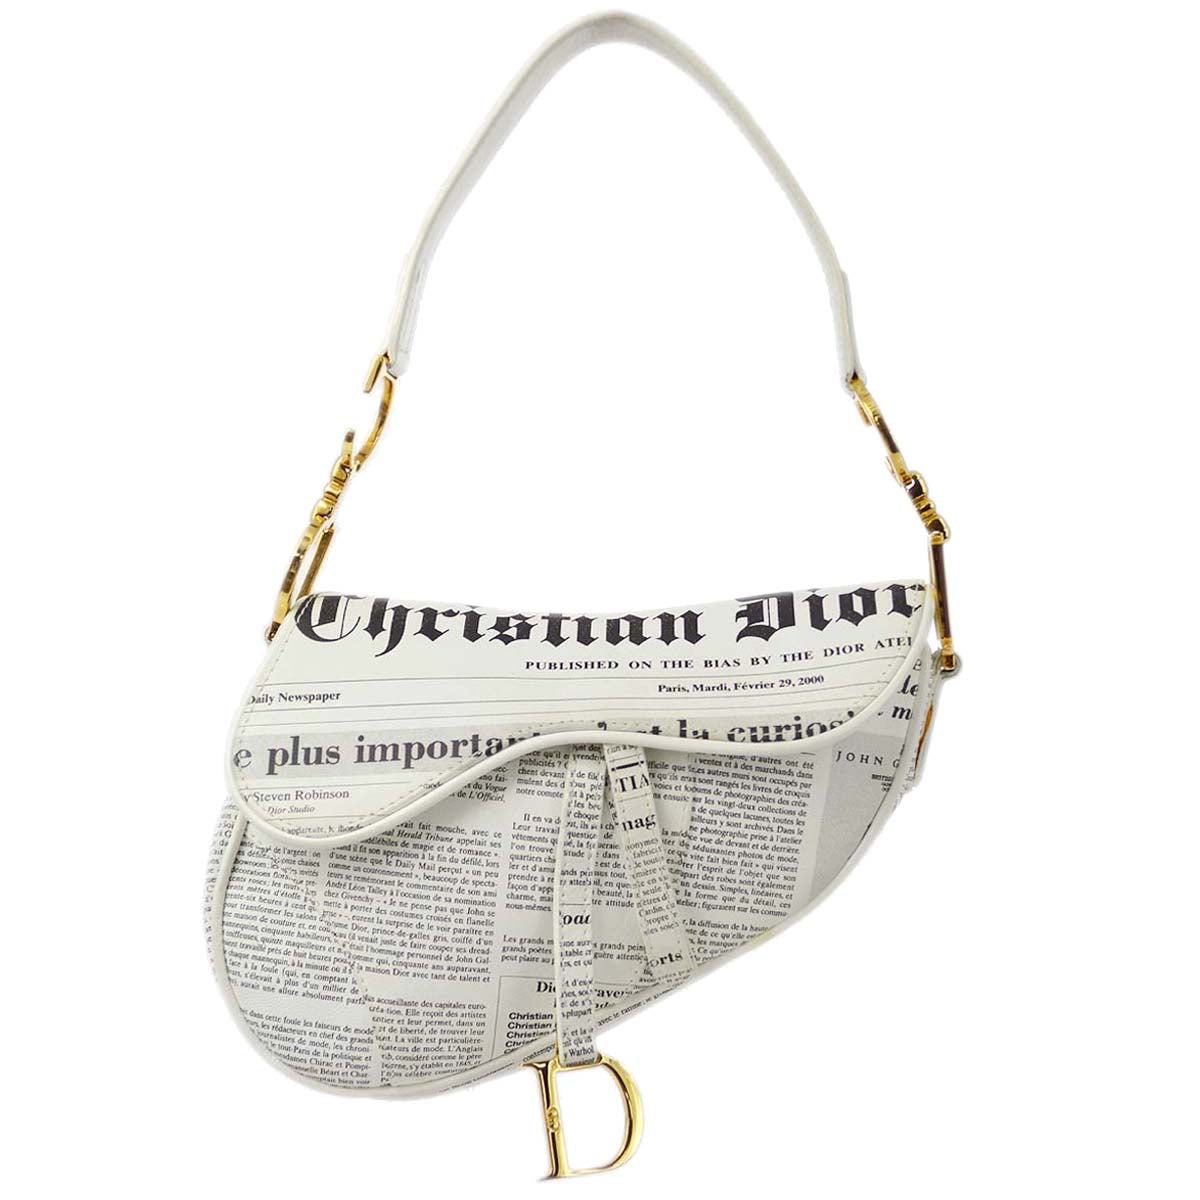 Christian Dior * 2000 John Galliano Small Newspaper Saddle Bag